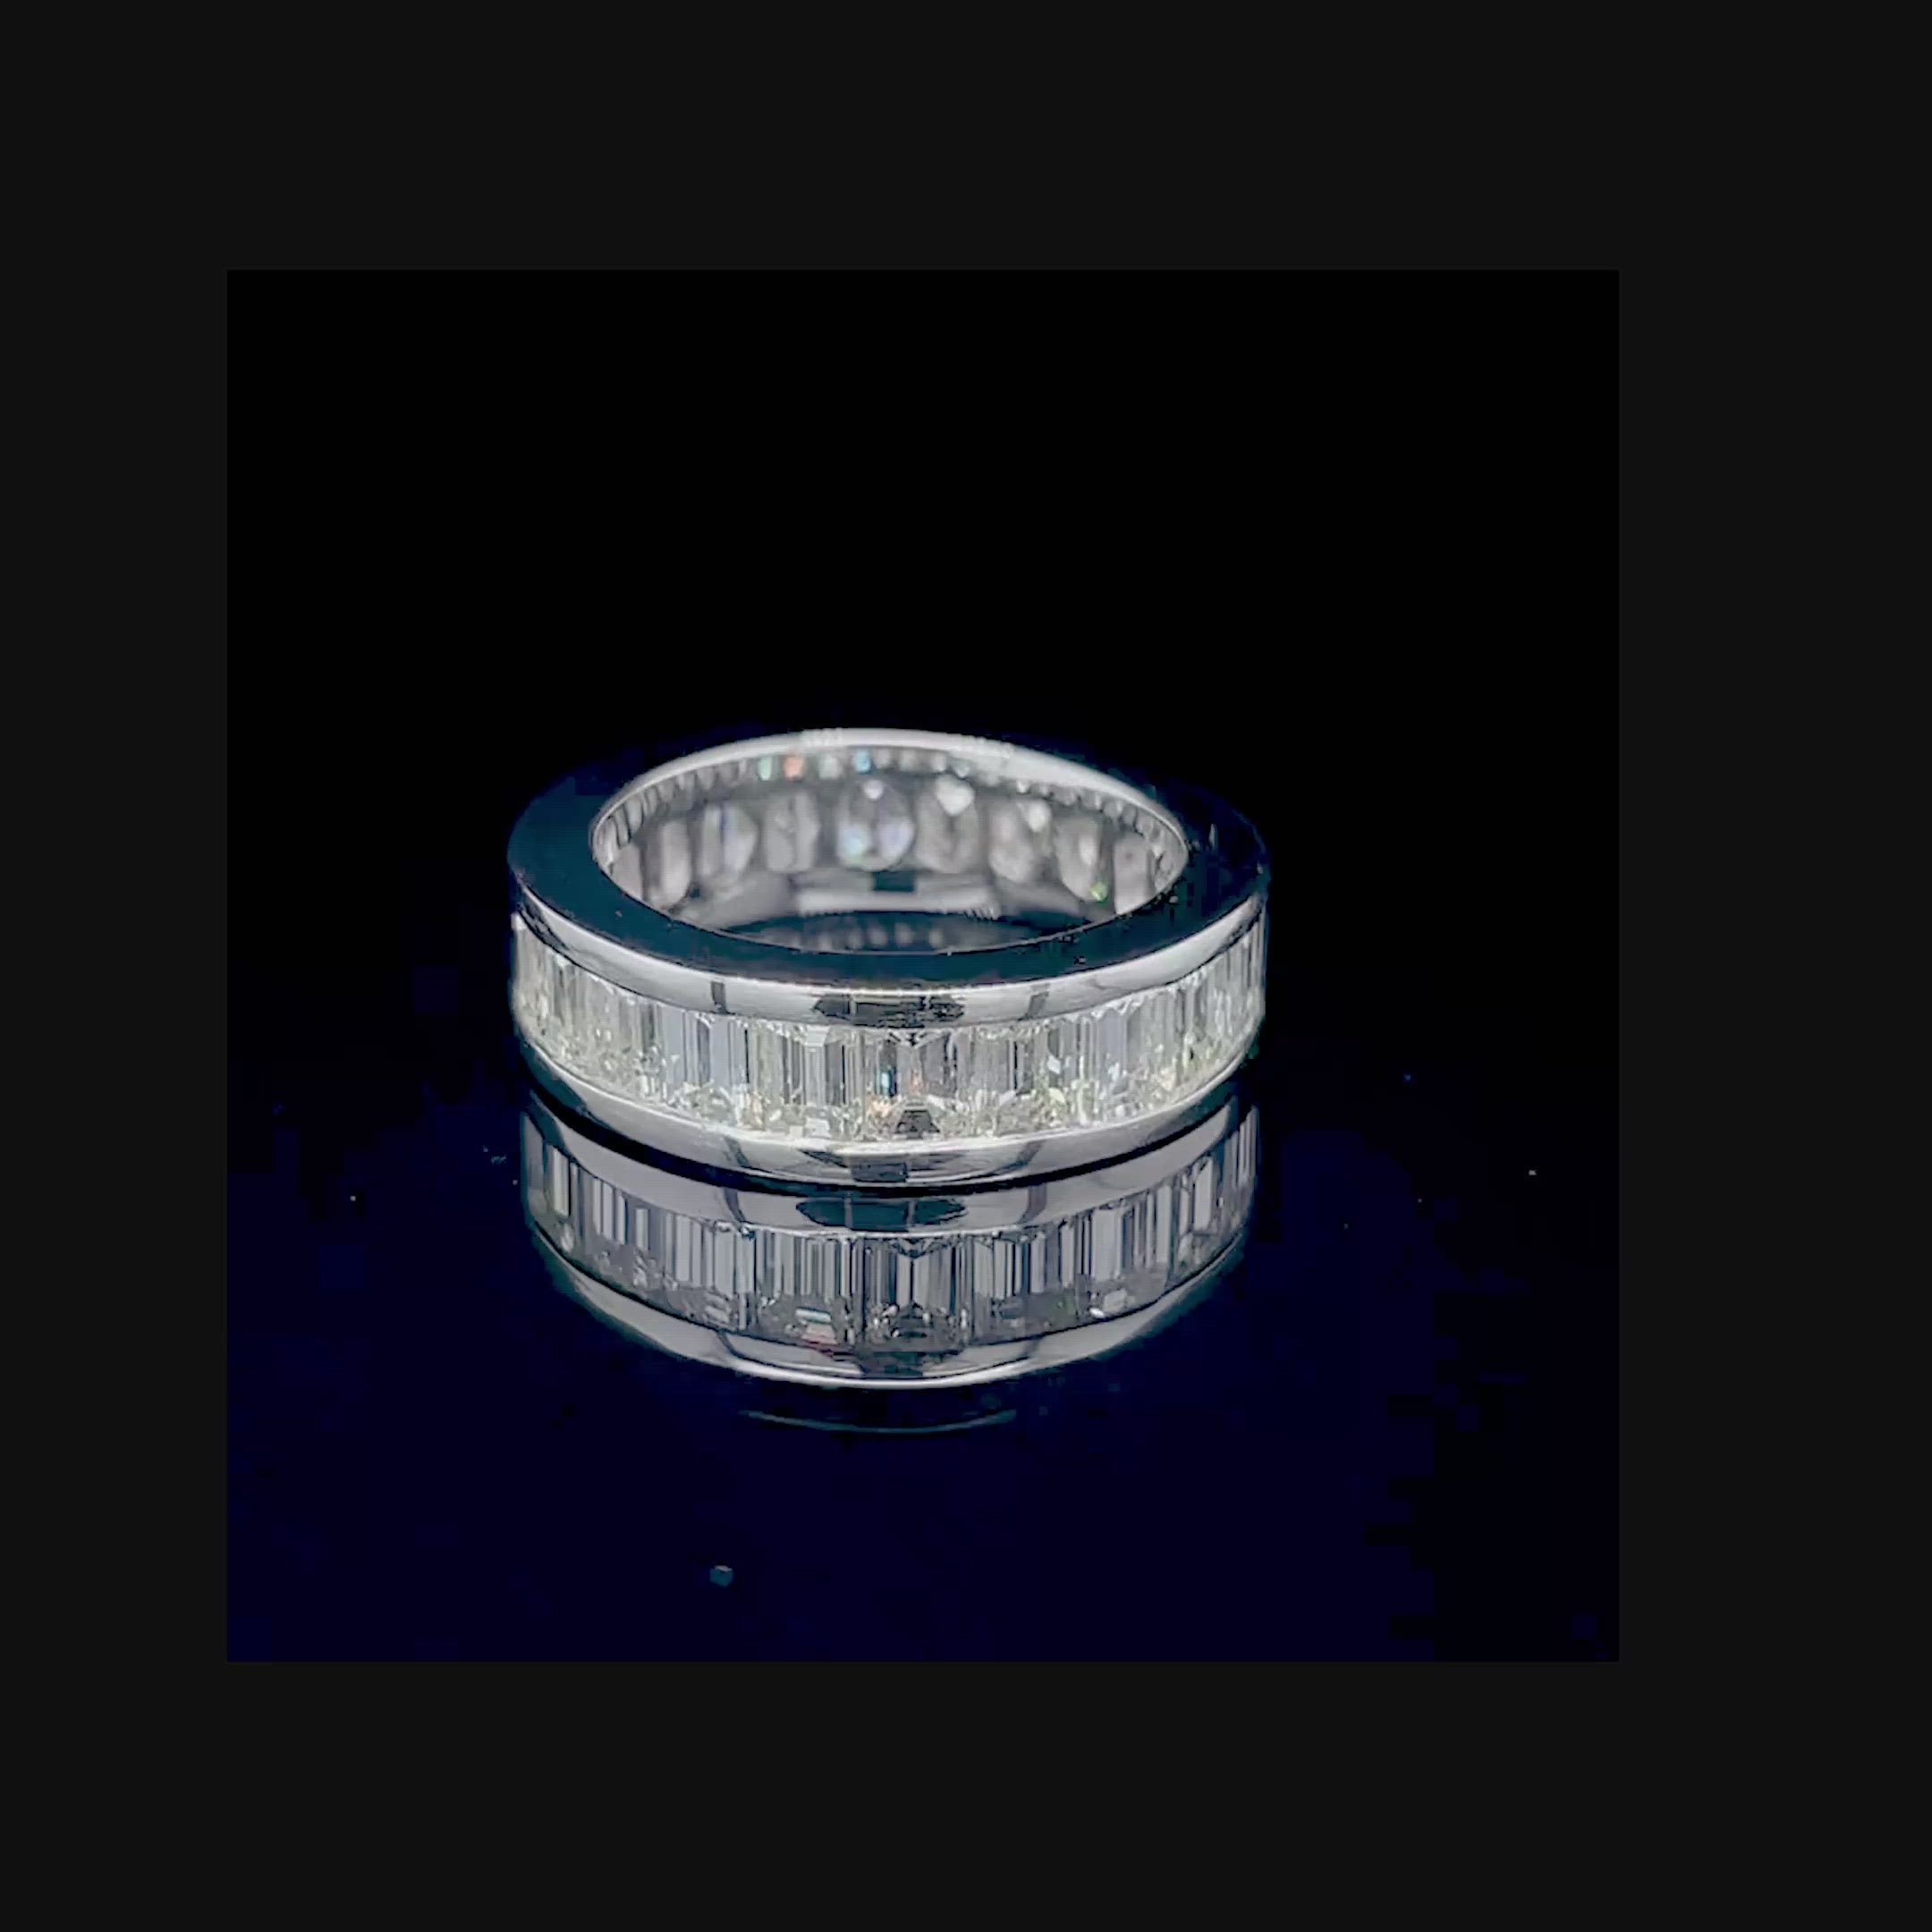 4.00-7.00 CT Emerald Cut Diamonds - Eternity Ring